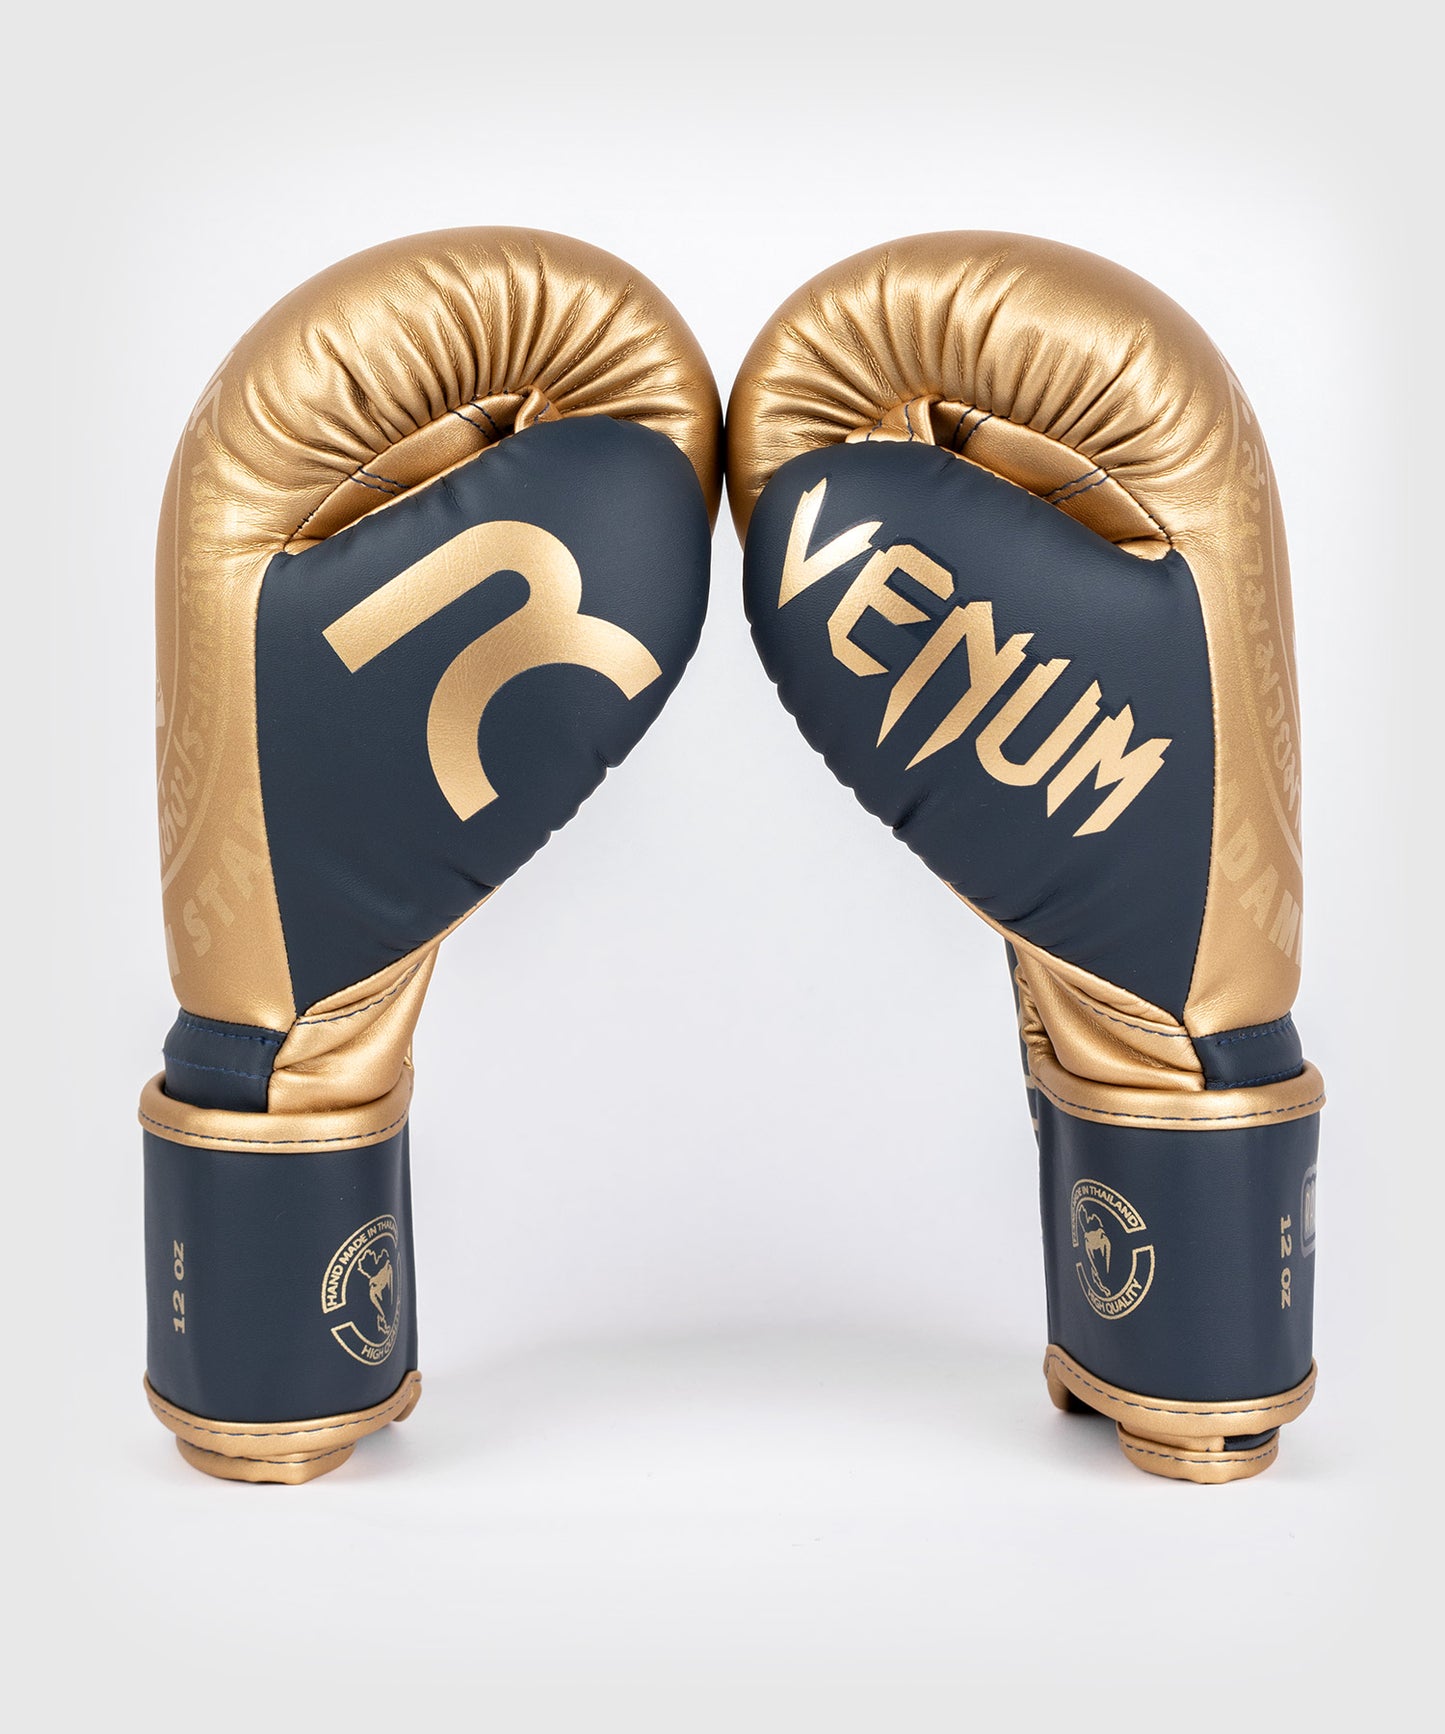 RAJADAMNERN x Venum Boxing Gloves - Sand